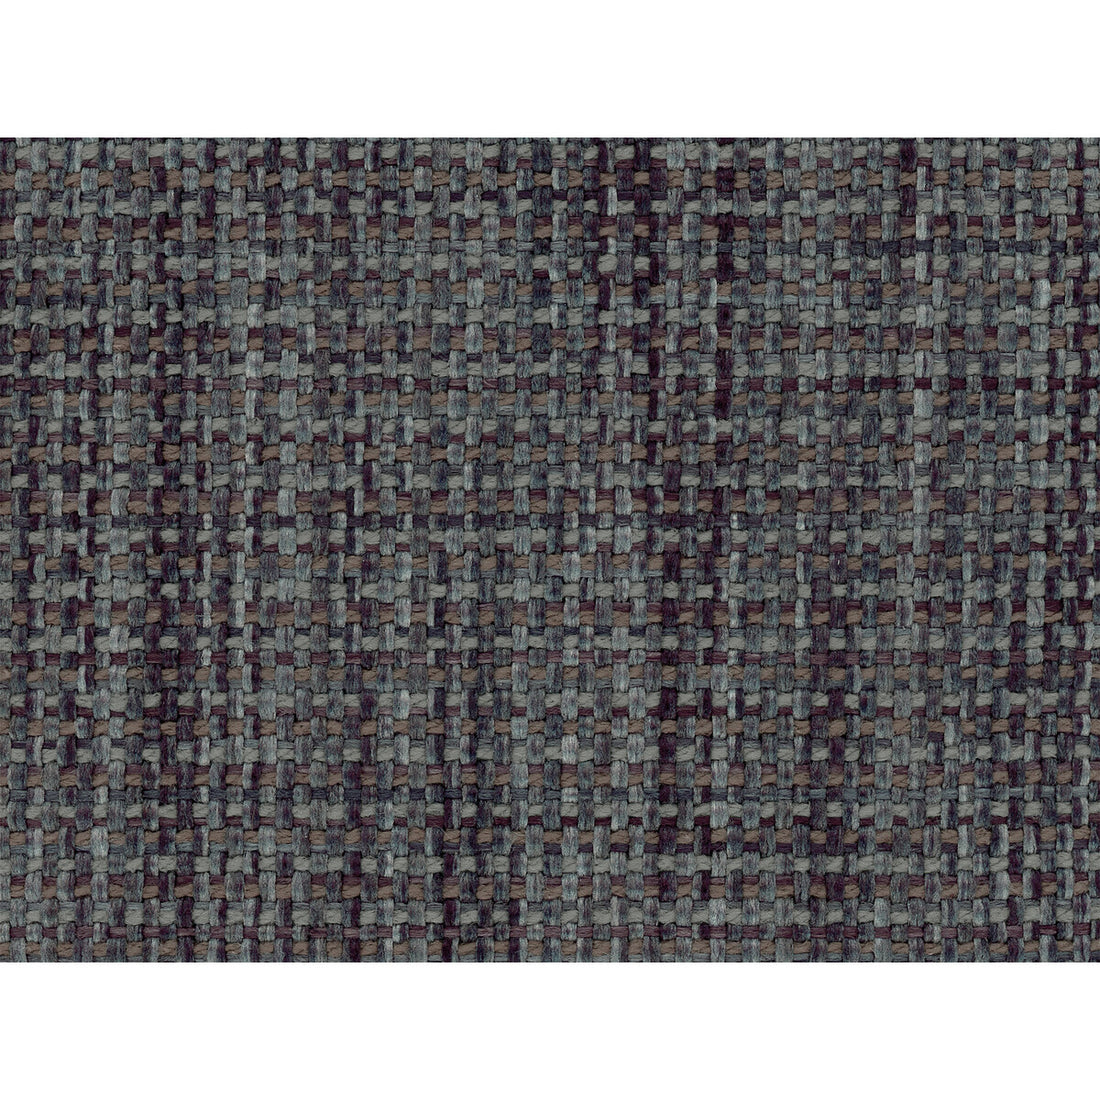 Kf Smt fabric - pattern 23846.505.0 - by Kravet Smart